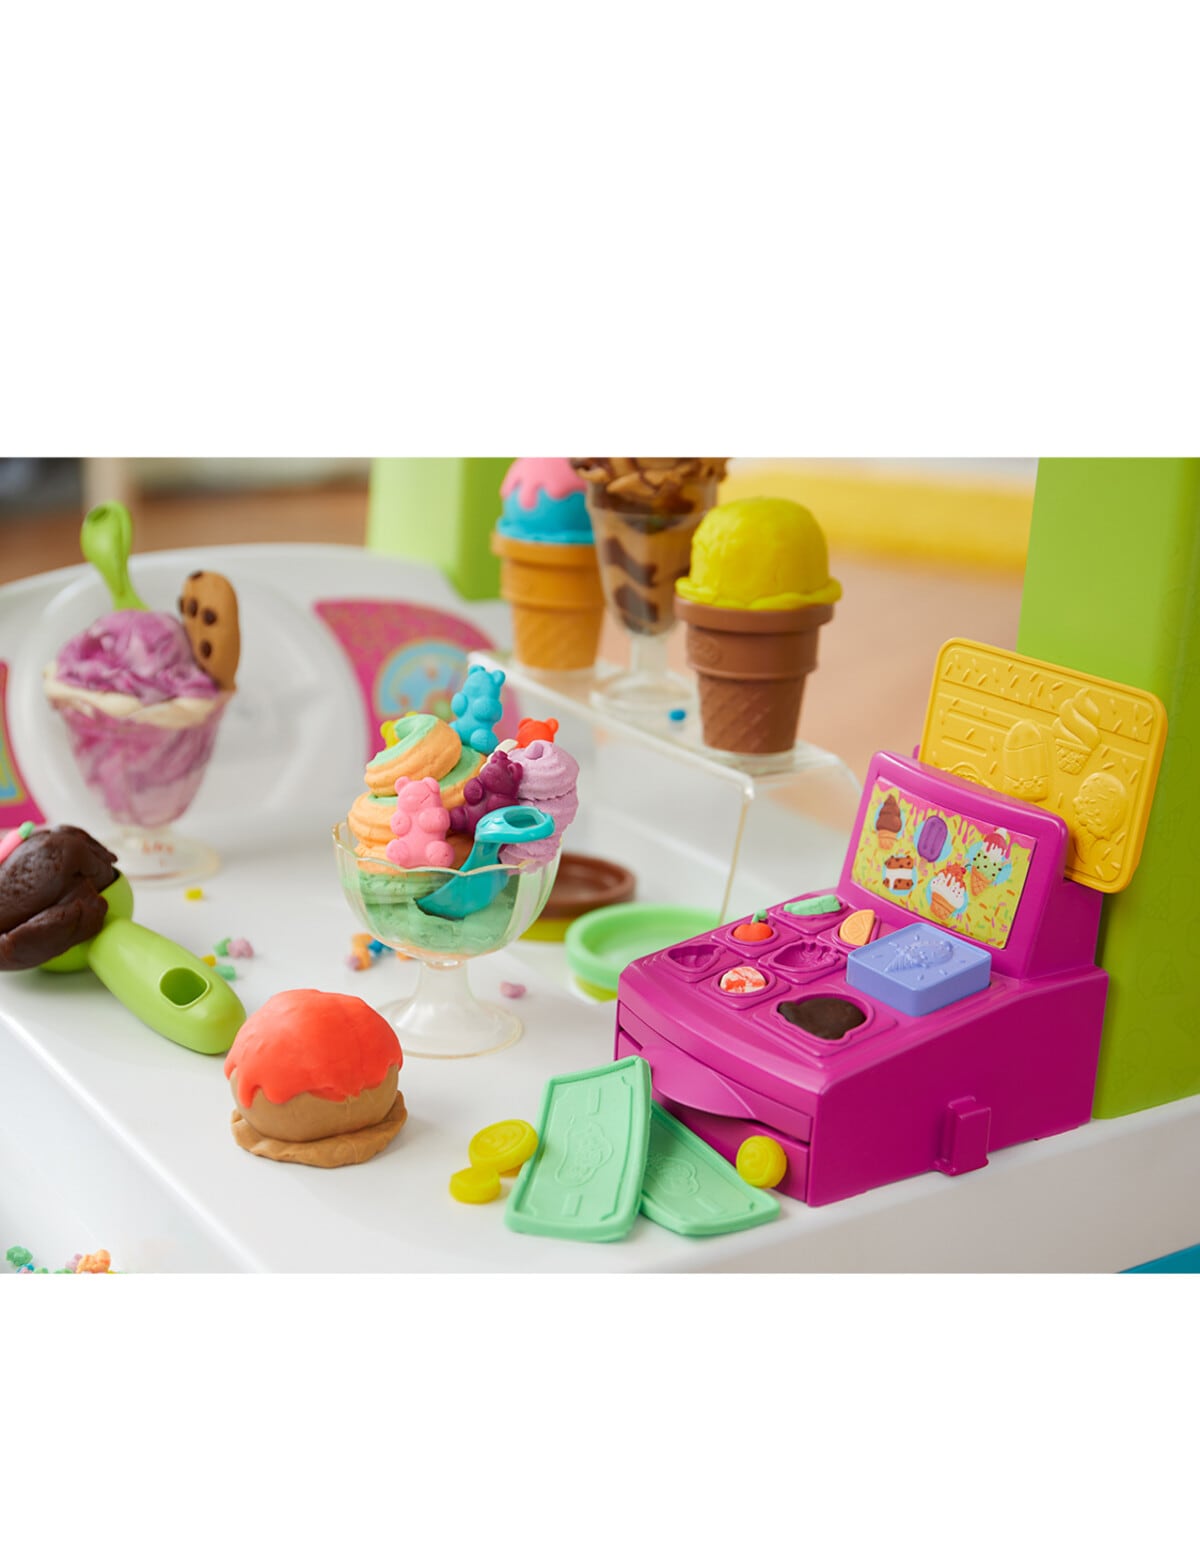 Hasbro Play Doh Kitchen Ice Cream Dough Play Up Set Toy Anti